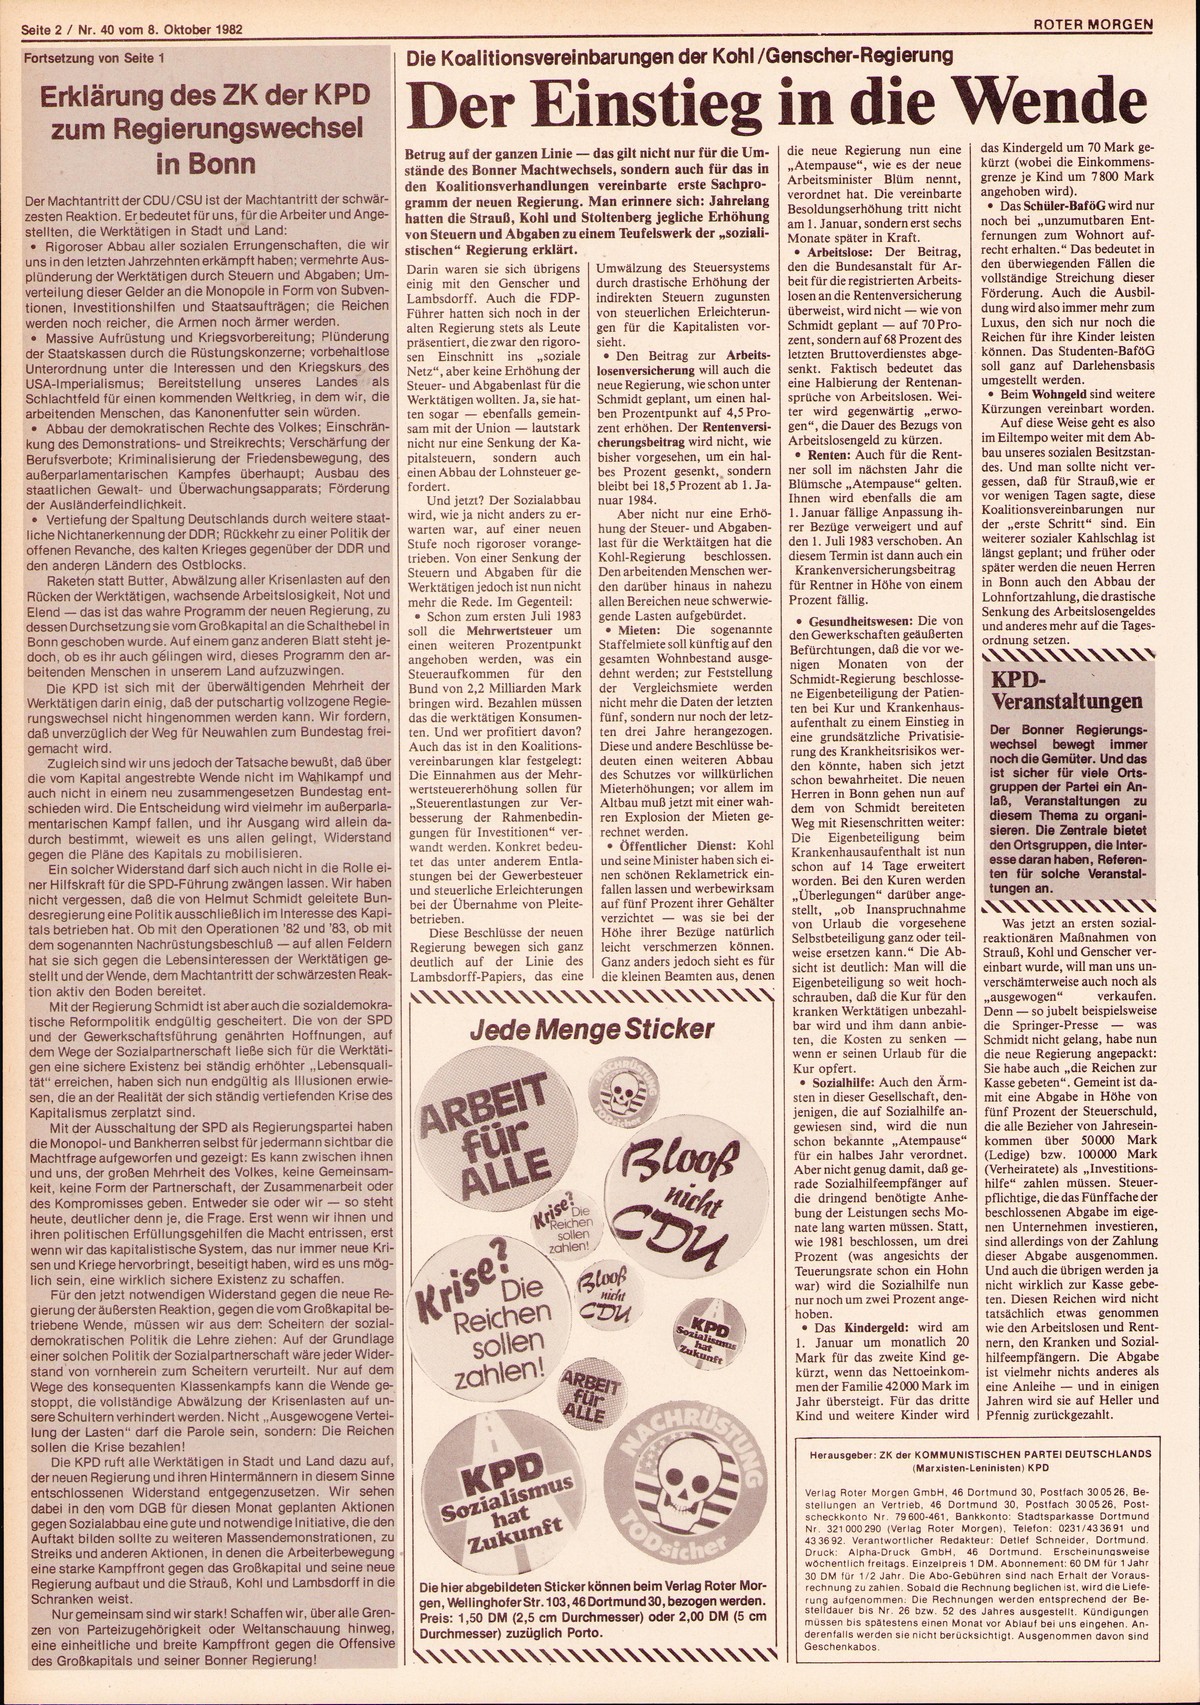 Roter Morgen, 16. Jg., 8. Oktober 1982, Nr. 40, Seite 2